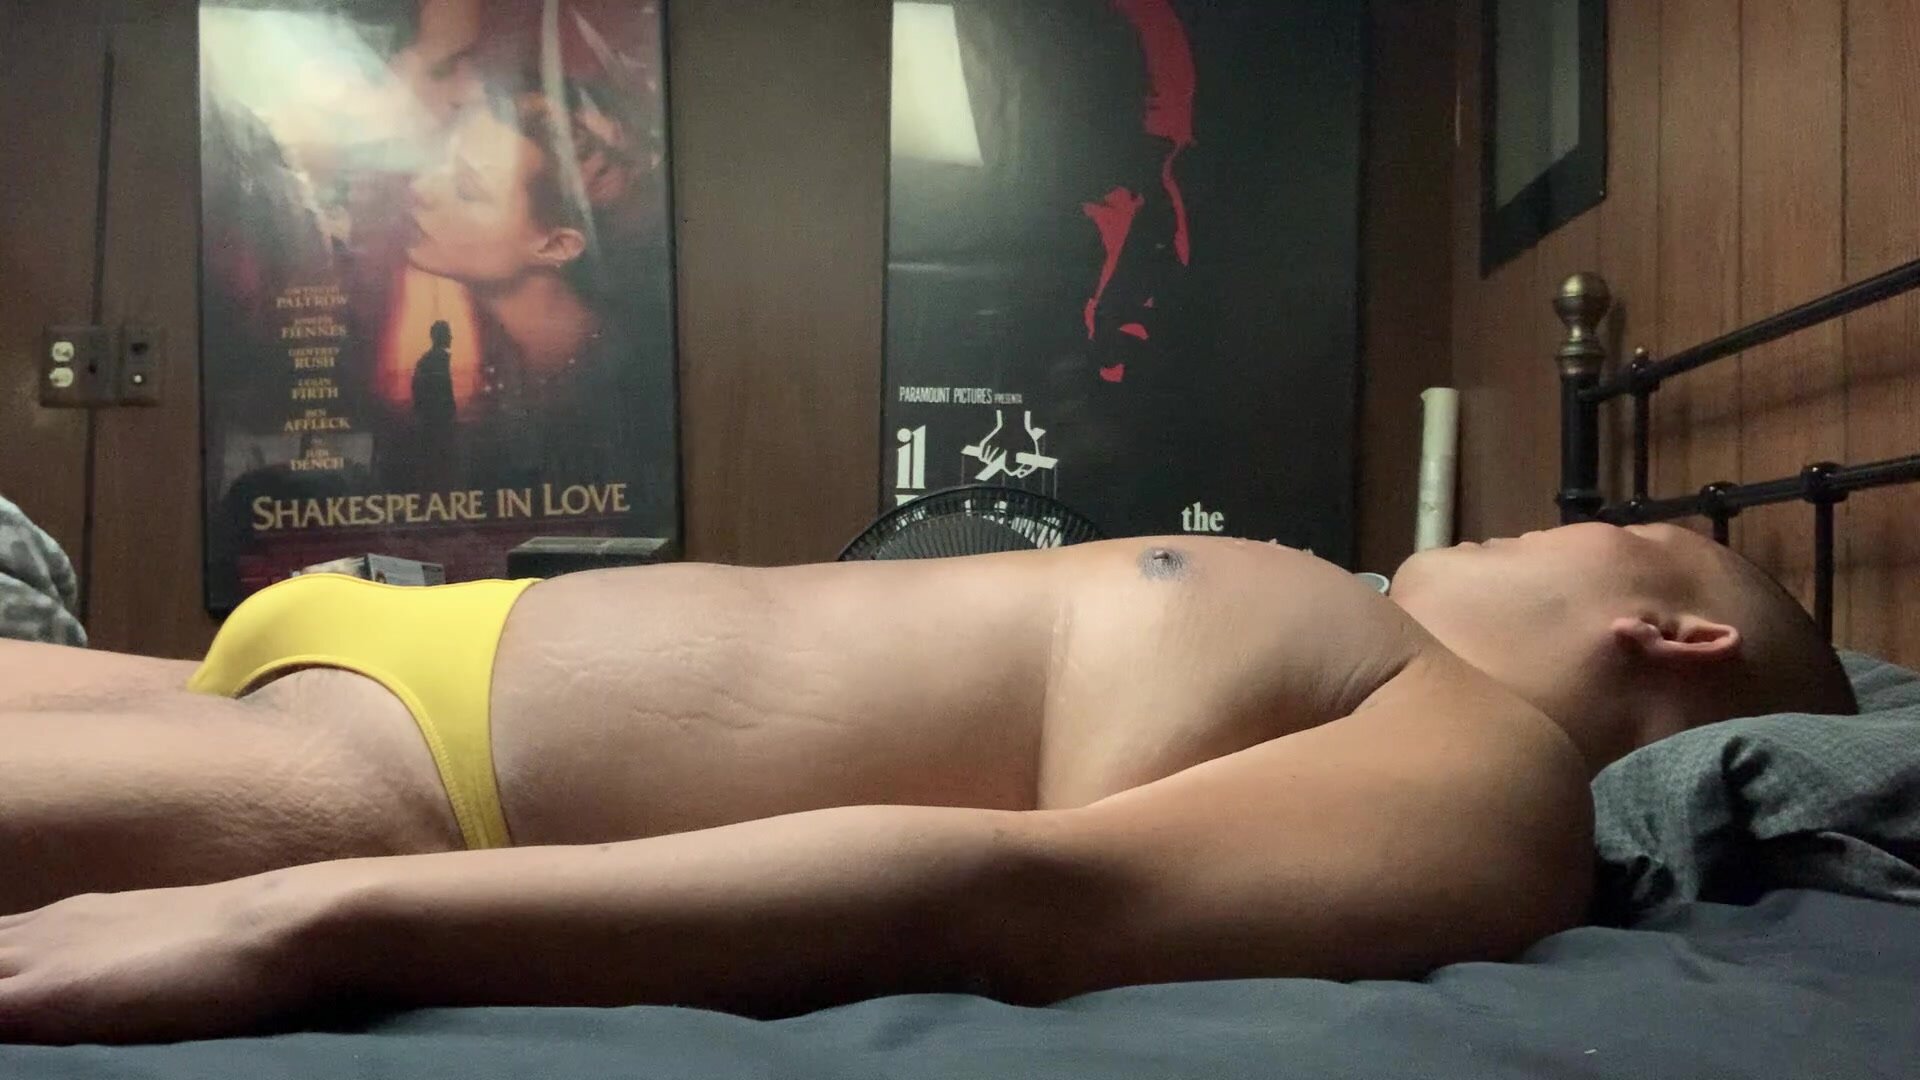 Sleeping in my yellow thong